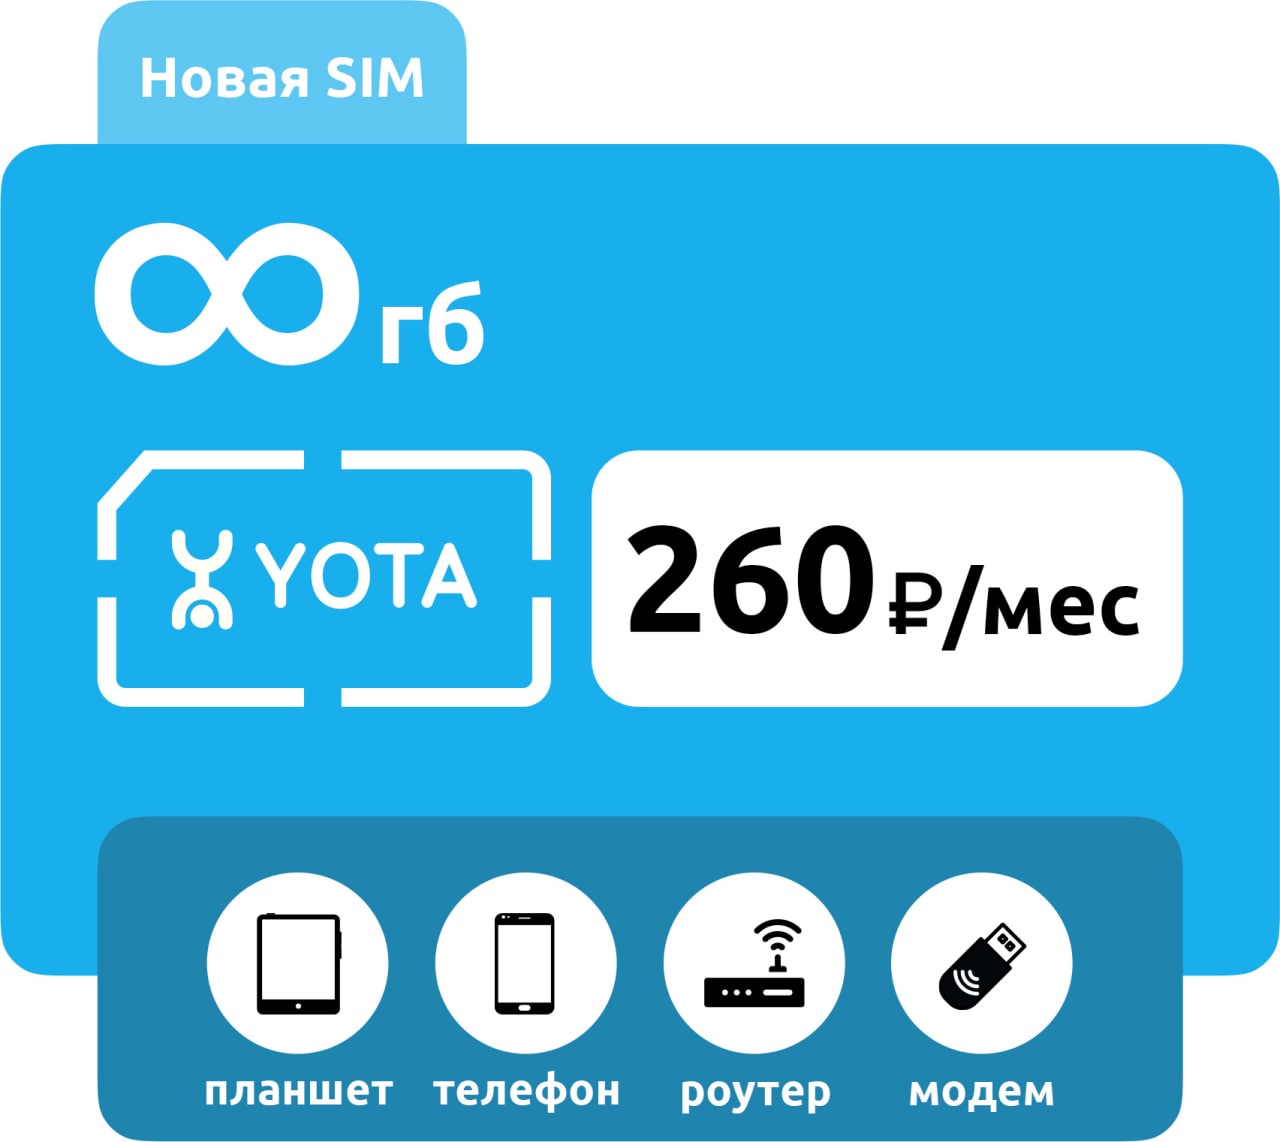 SIM-карта Yota 260 с раздачей (для любого устройства) фото